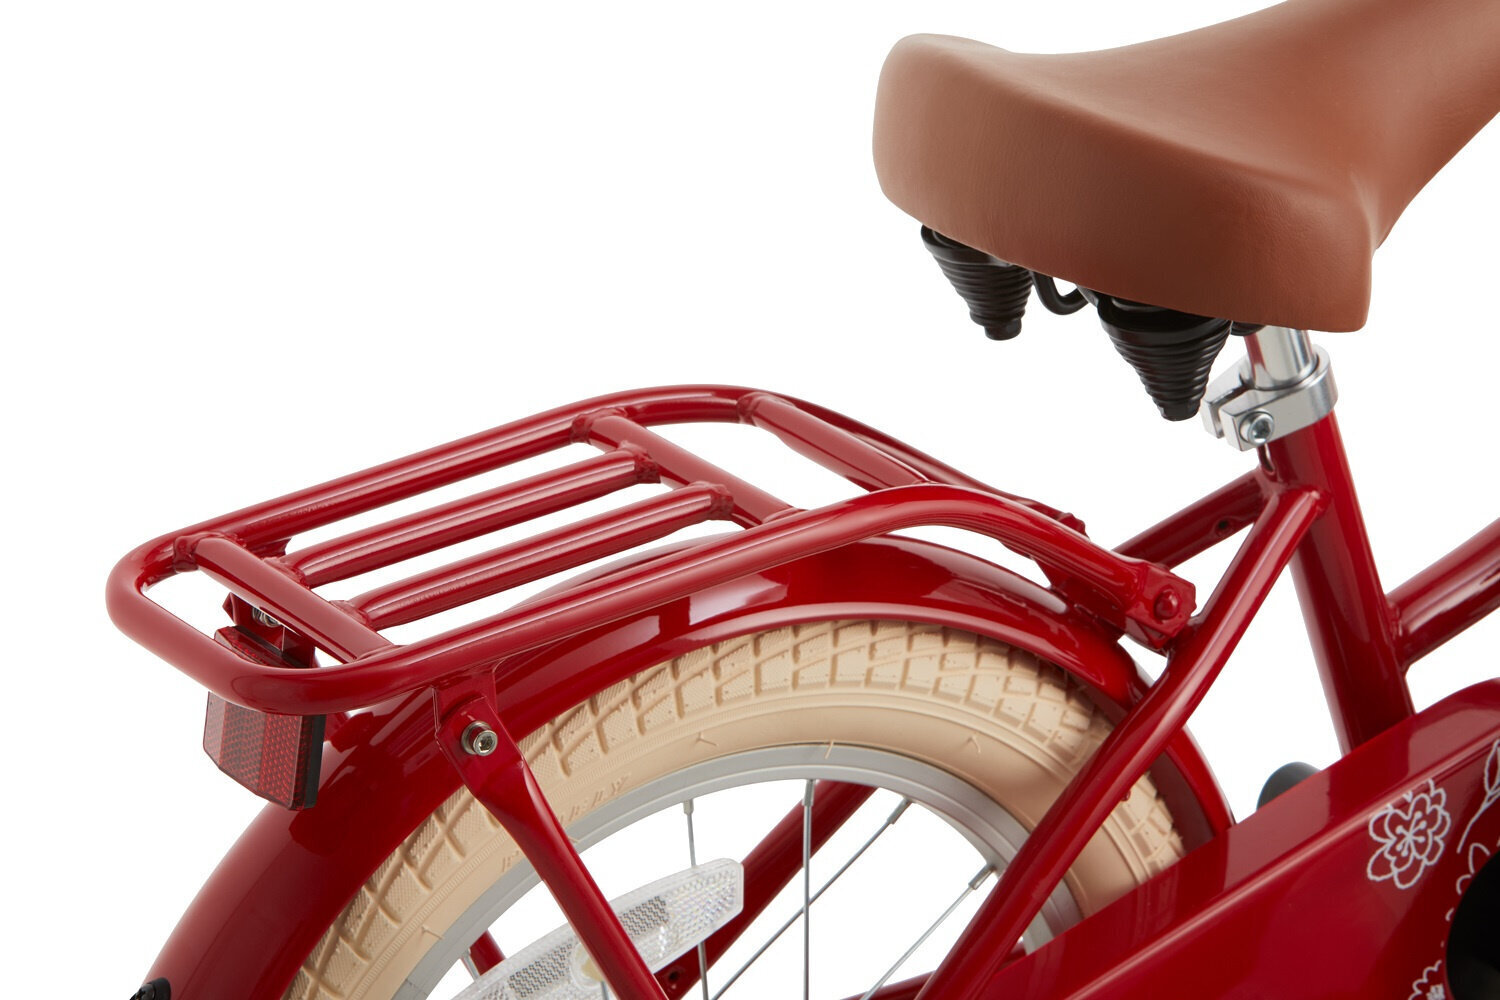 Bērnu velosipēds Supersuper Cooper 18", 28 cm, sarkans cena un informācija | Velosipēdi | 220.lv